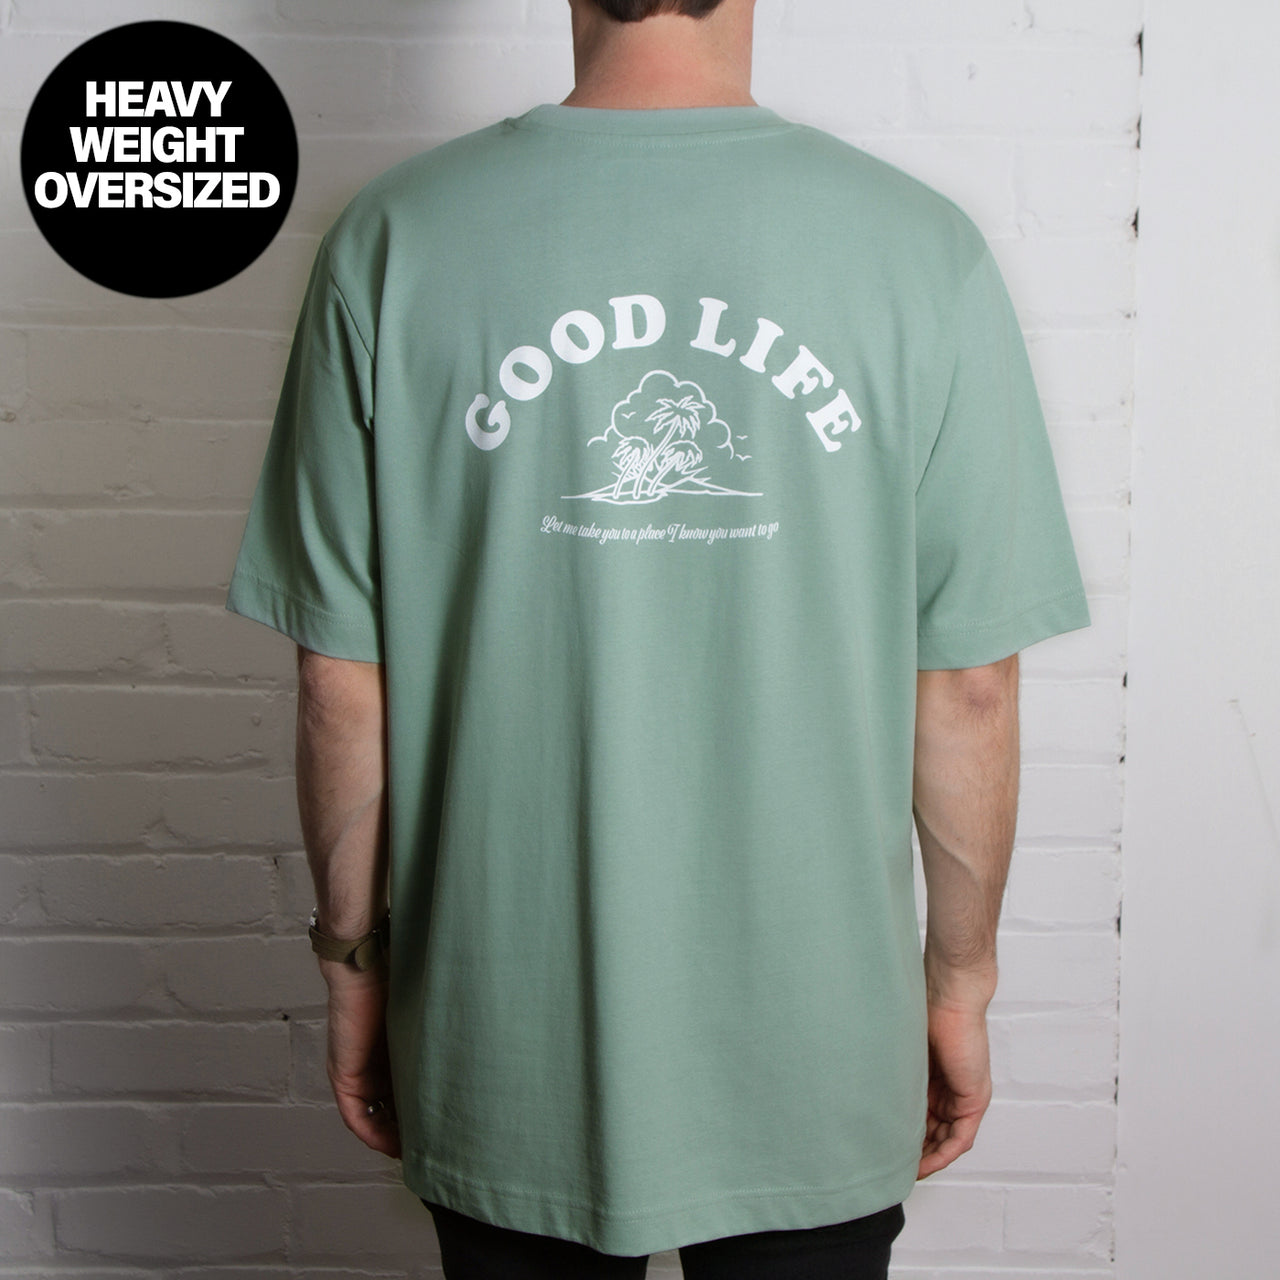 Good Life - Heavyweight Oversized Tshirt - Aloe